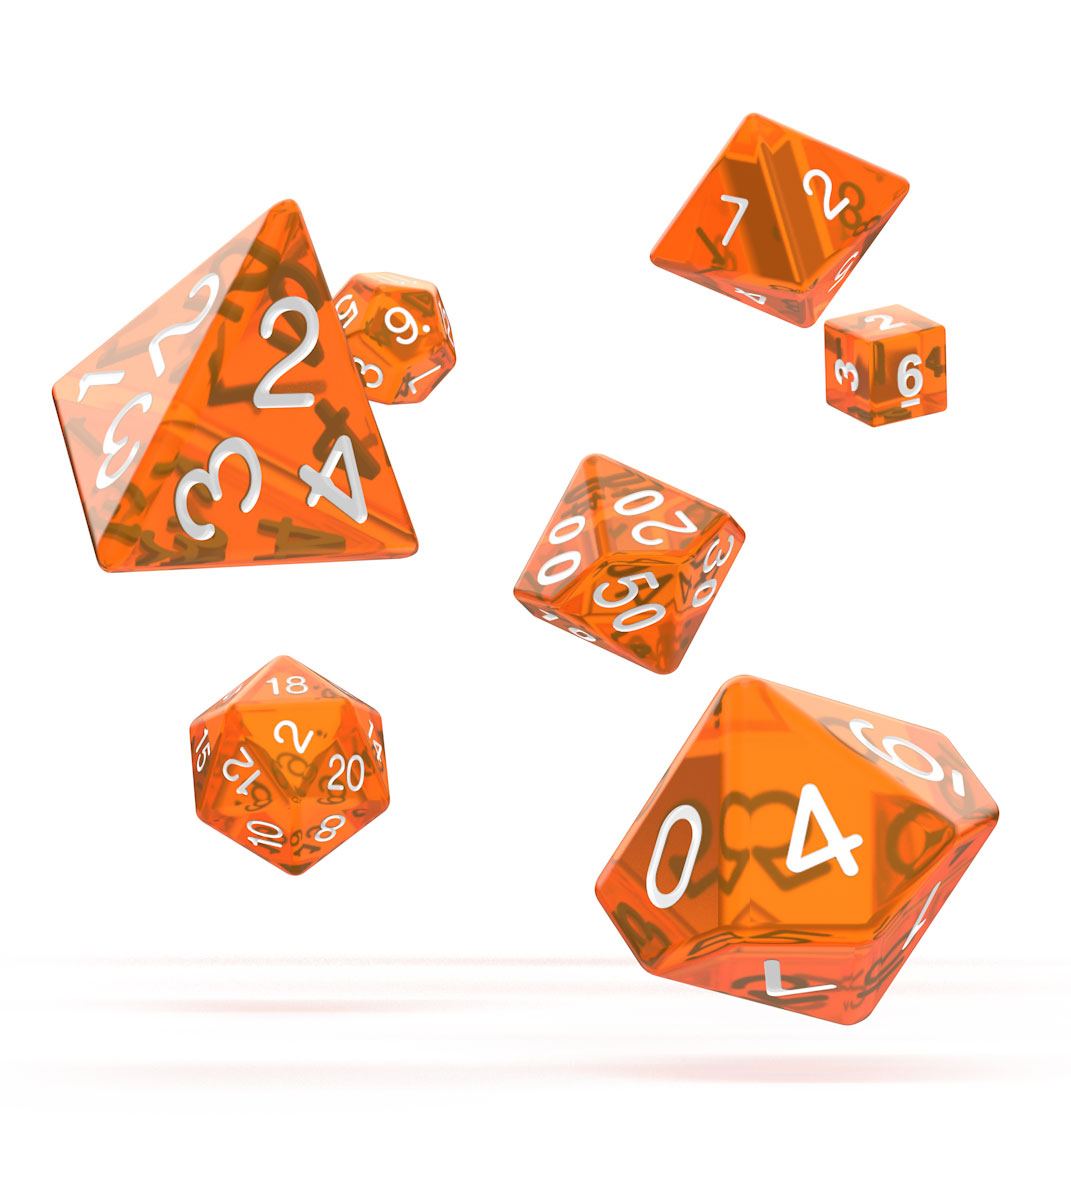 Kocka Set (7) - Oakie Doakie Dice RPG Set Translucent - Orange